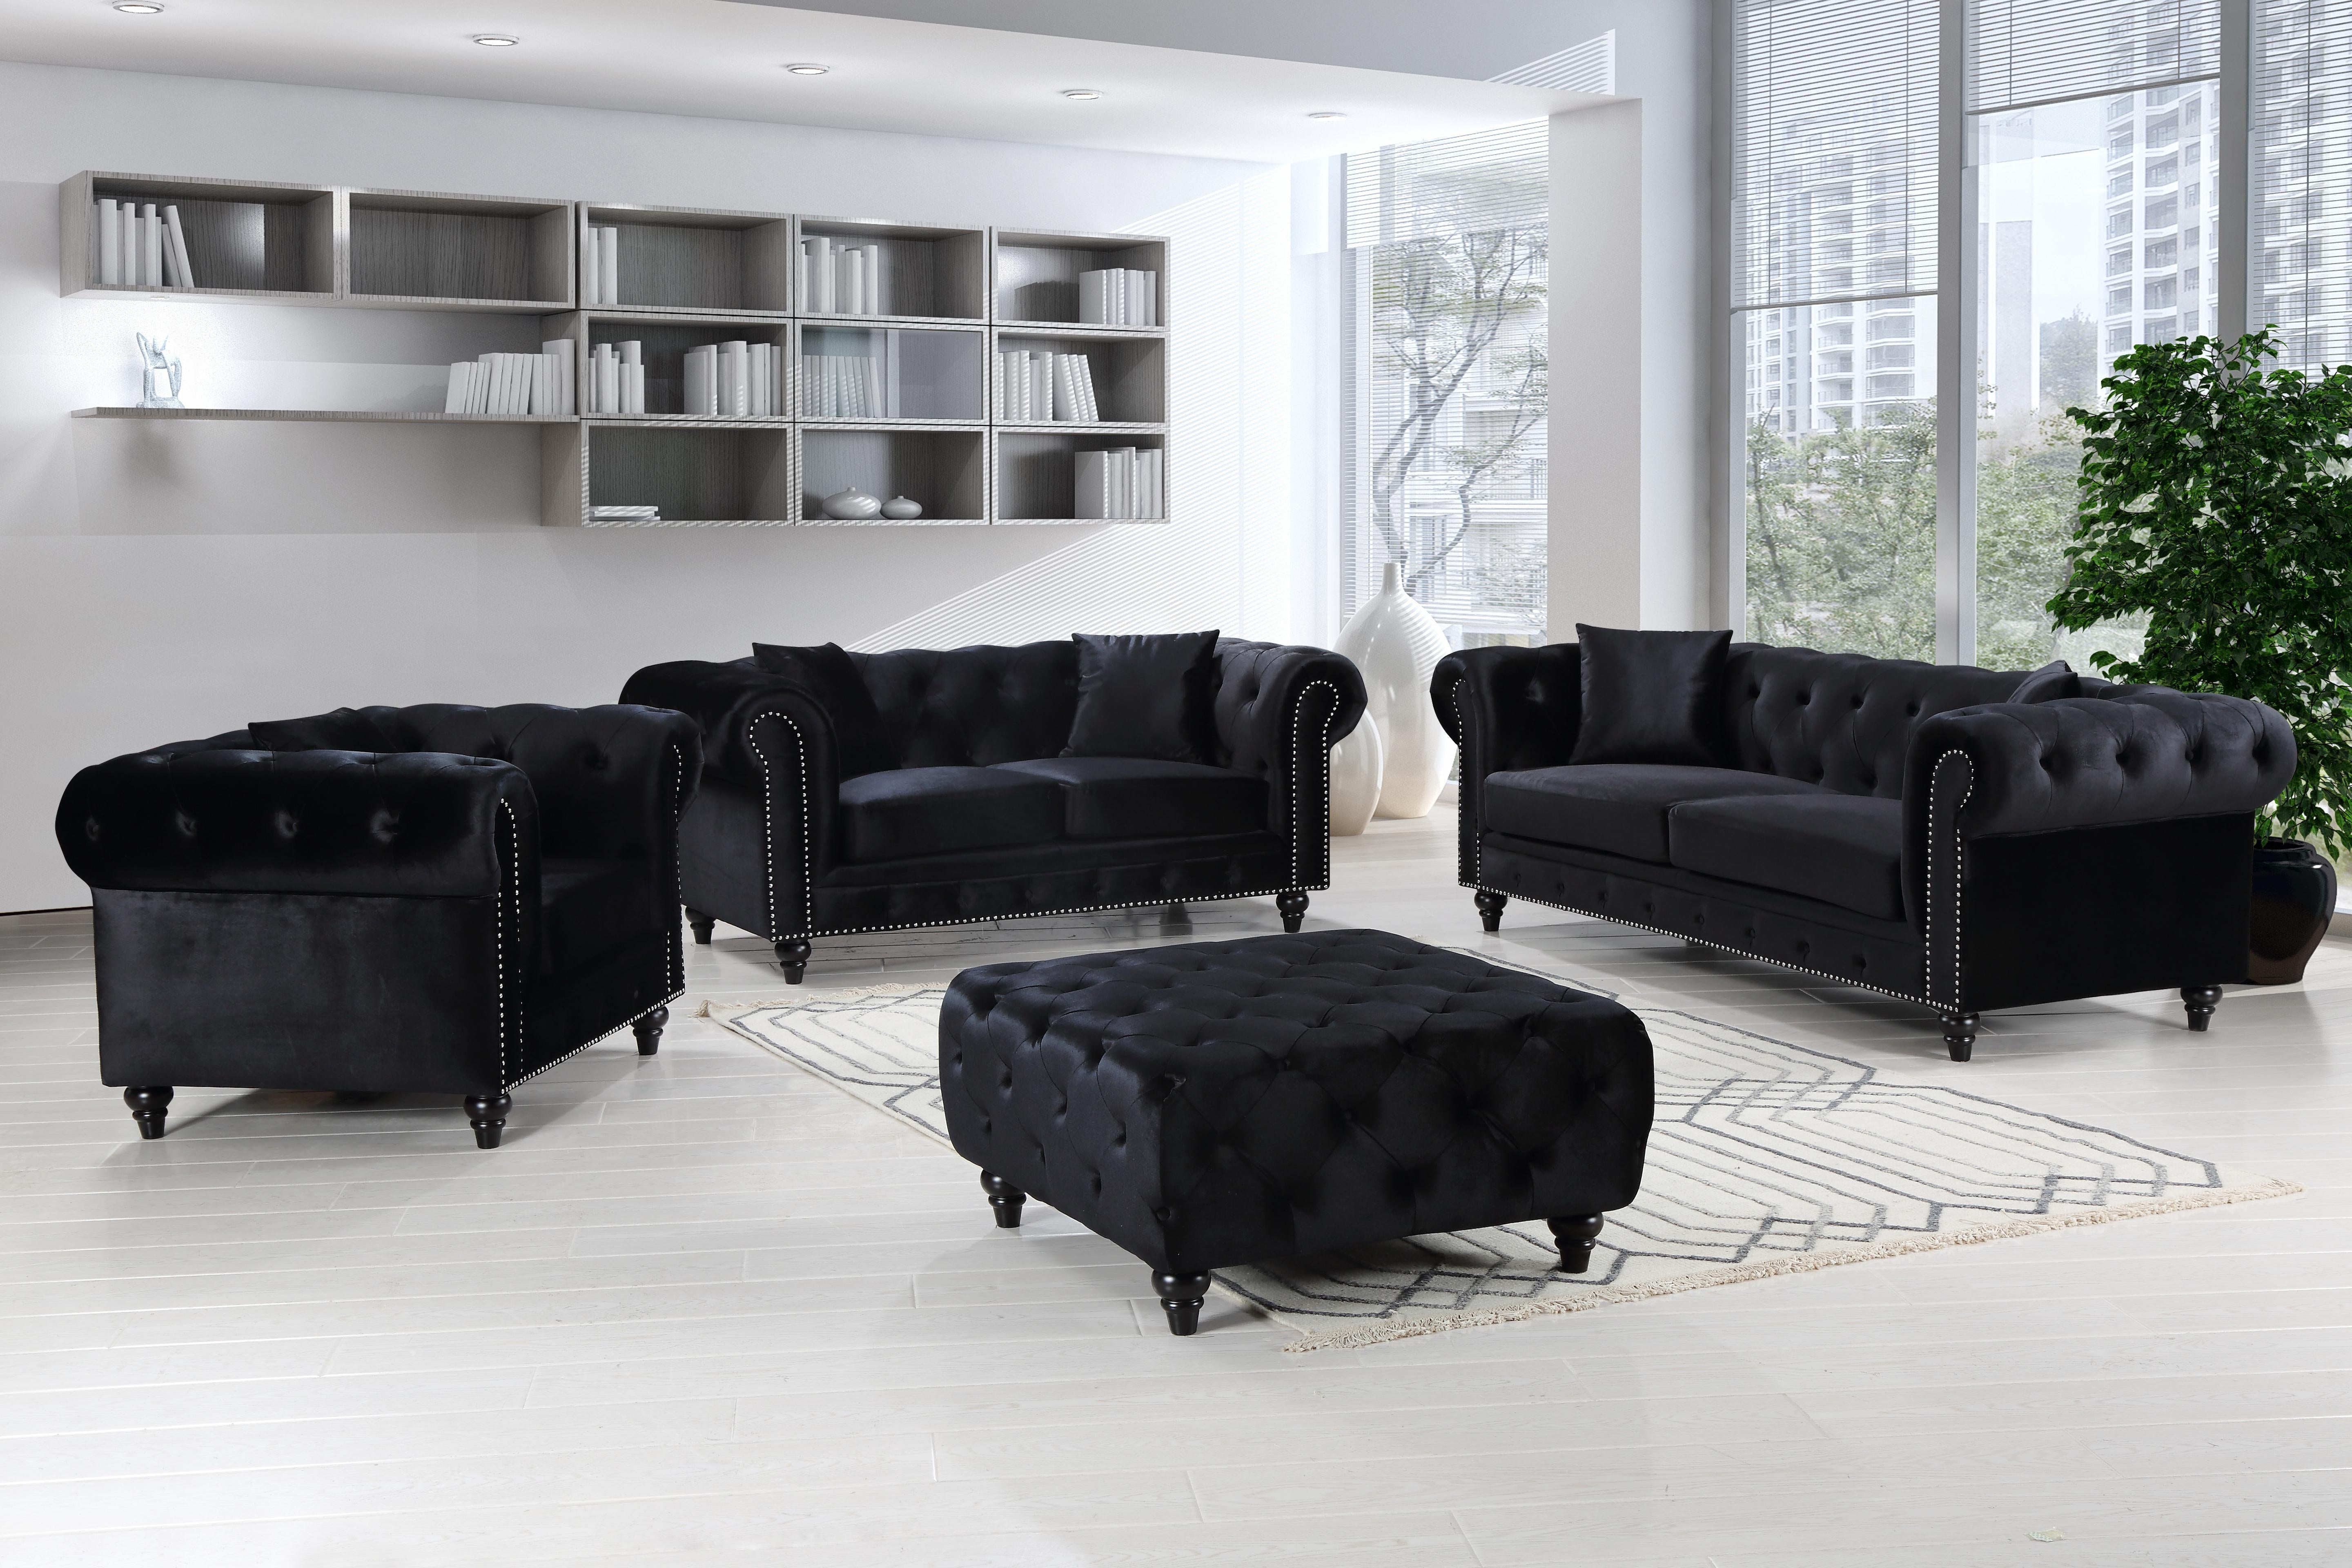 Chesterfield Black Velvet Chair - Luxury Home Furniture (MI)